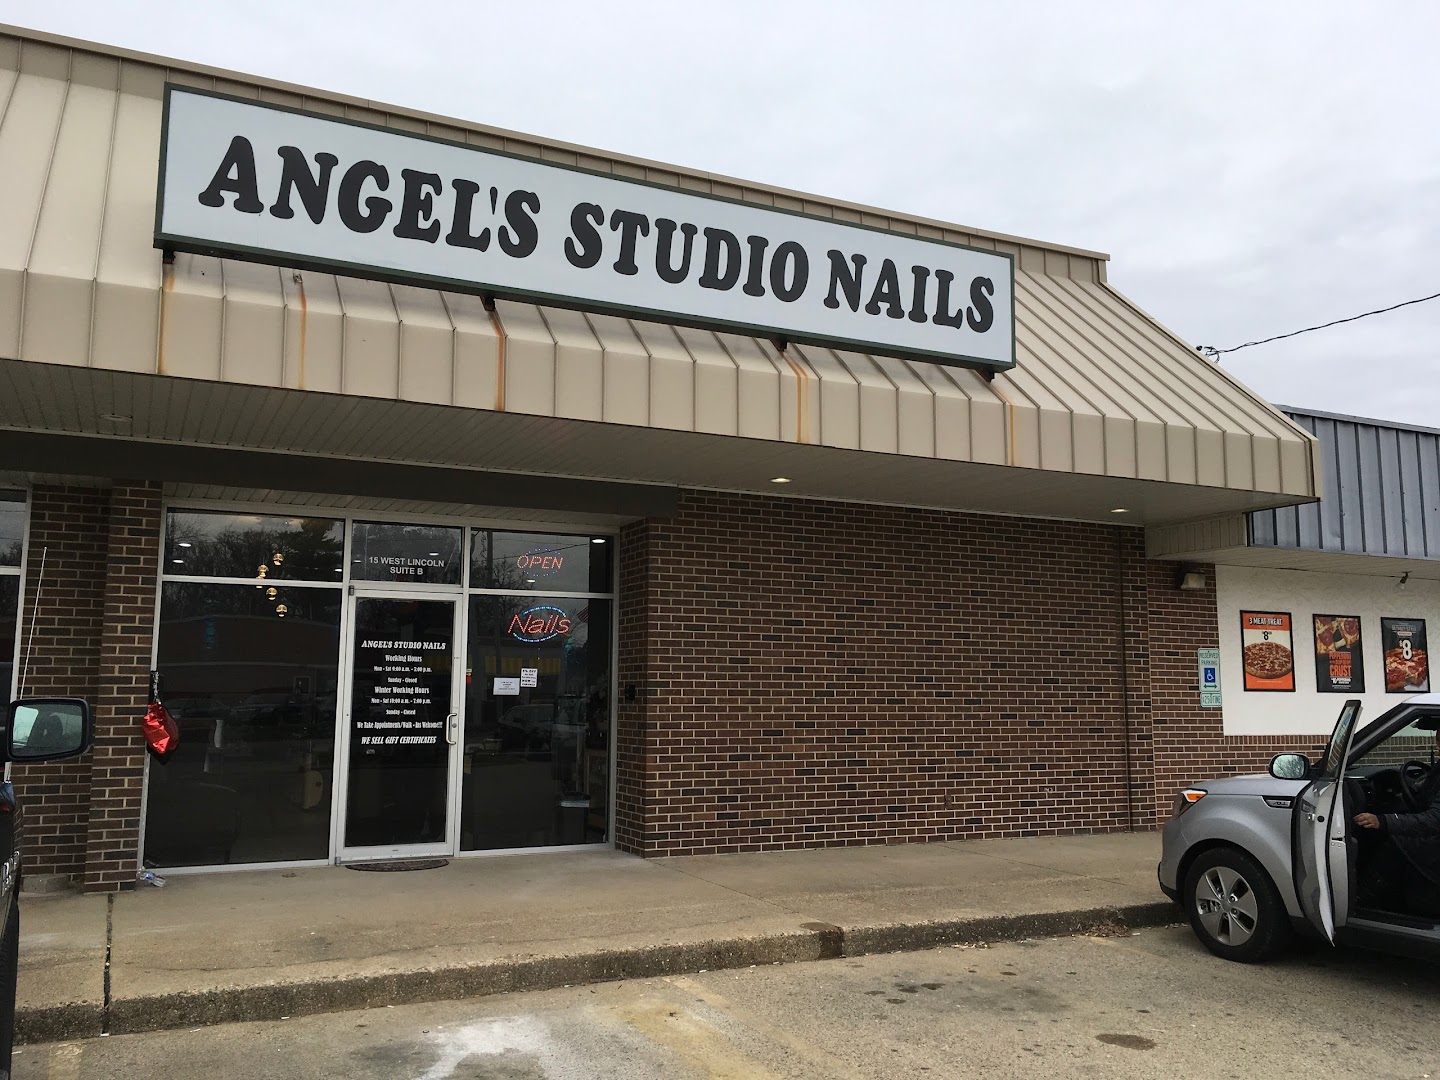 Angel's Studio Nails